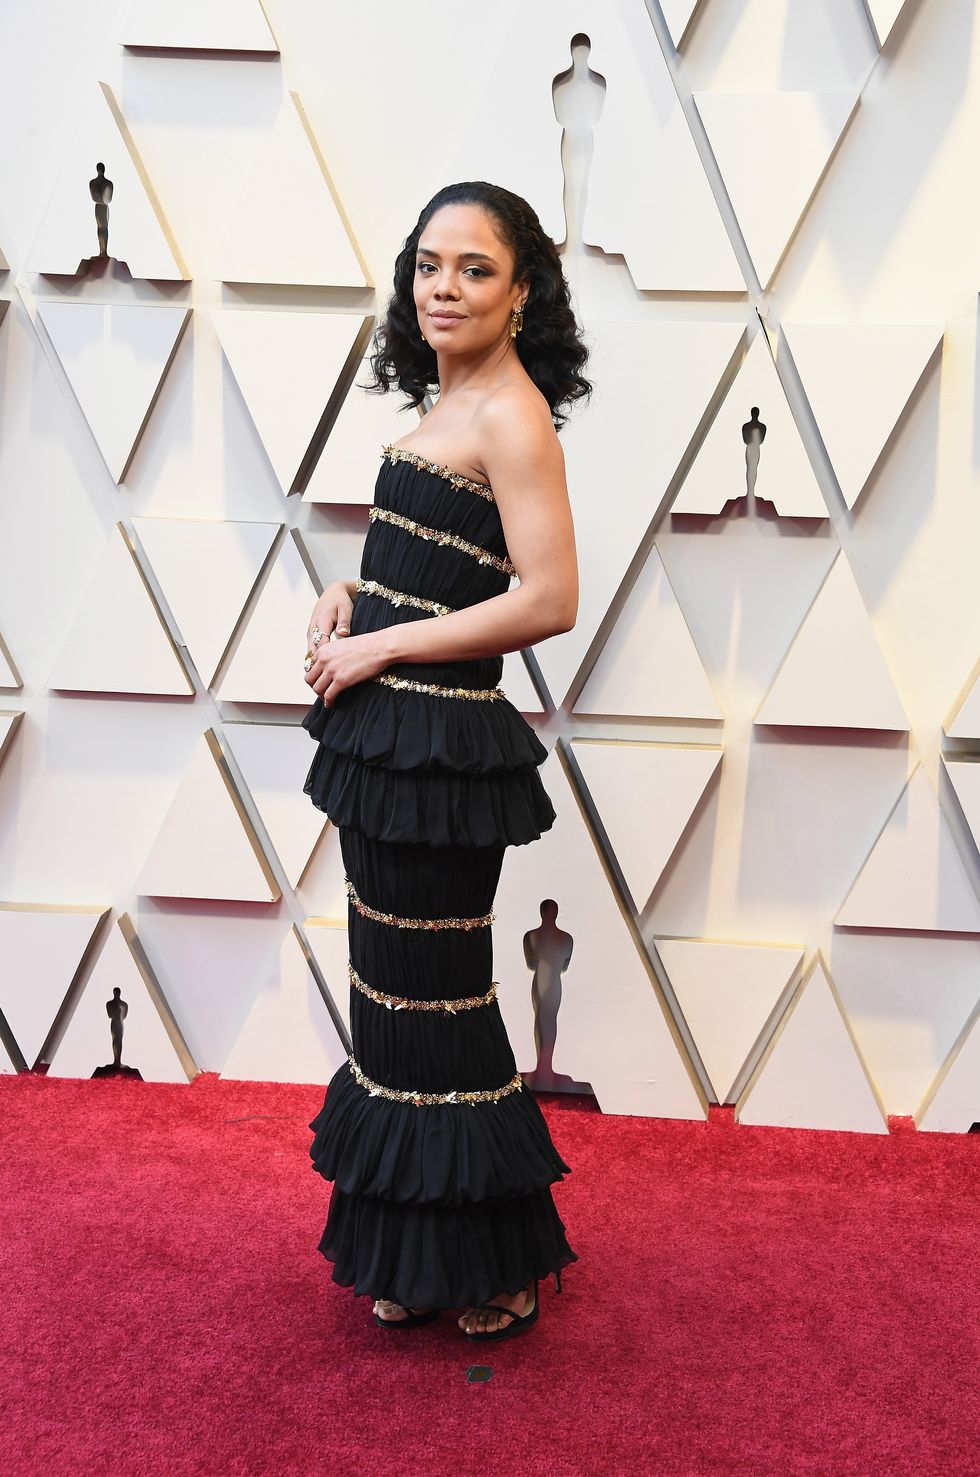 Tessa thompson at the Oscars 2019